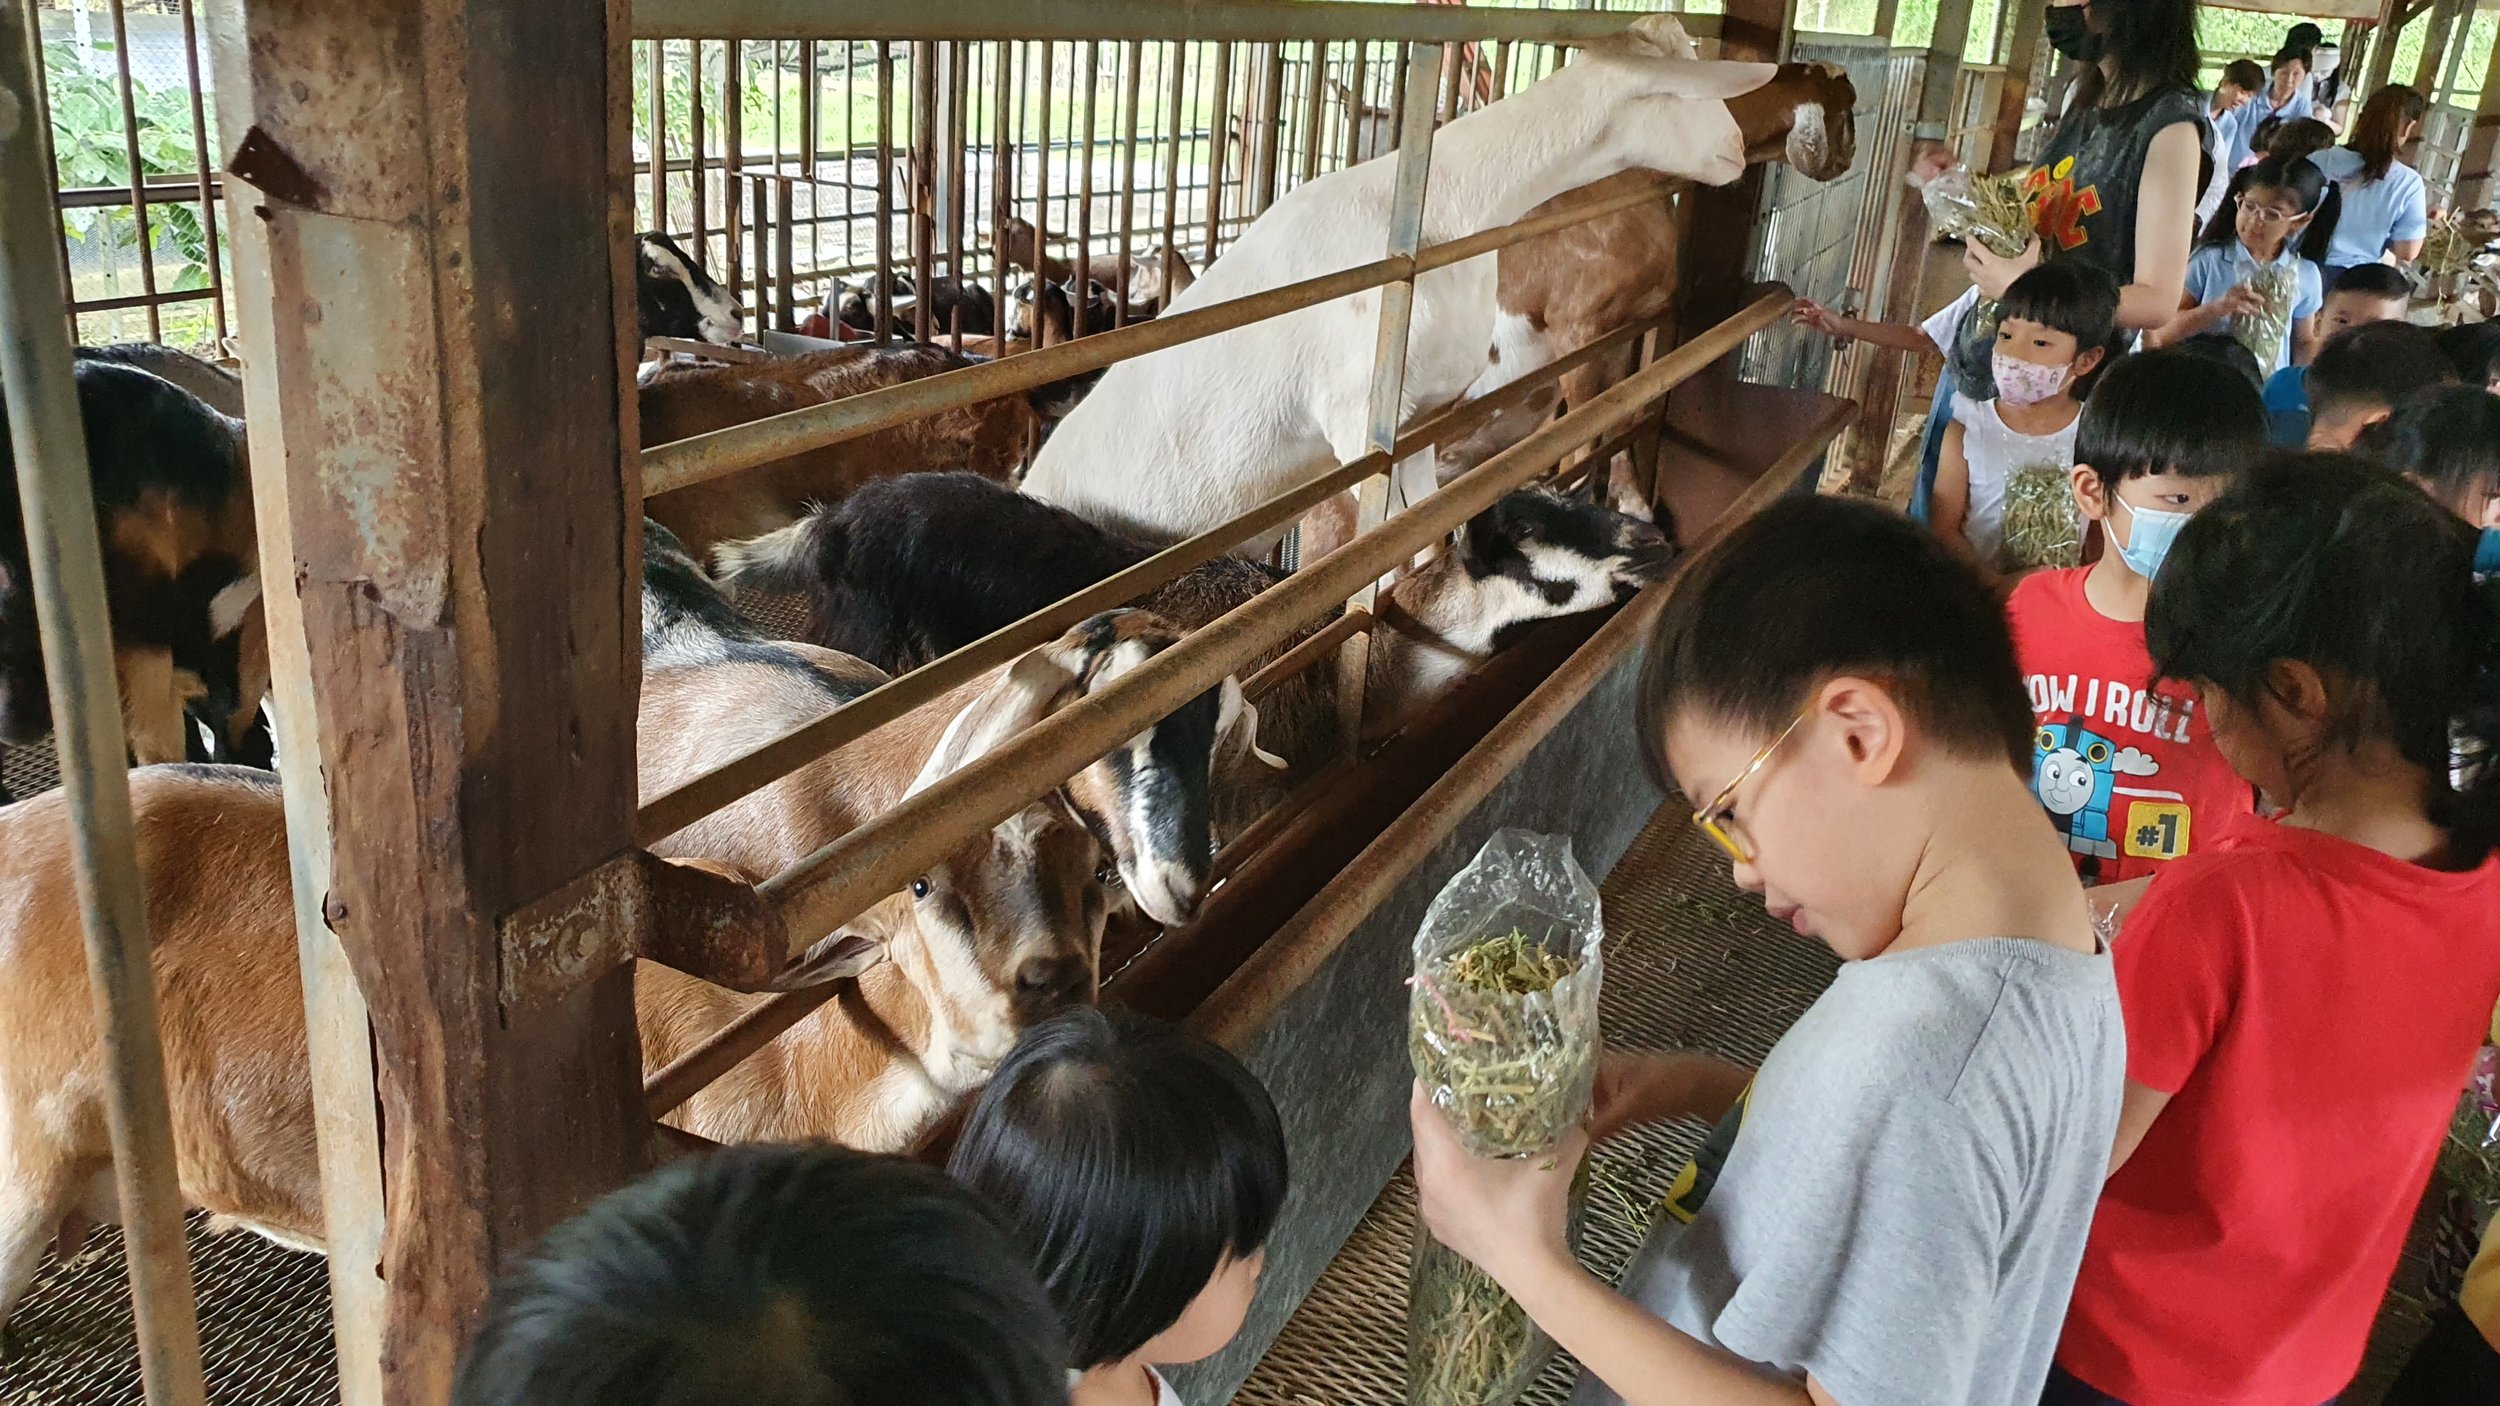  Feeding the goats. 